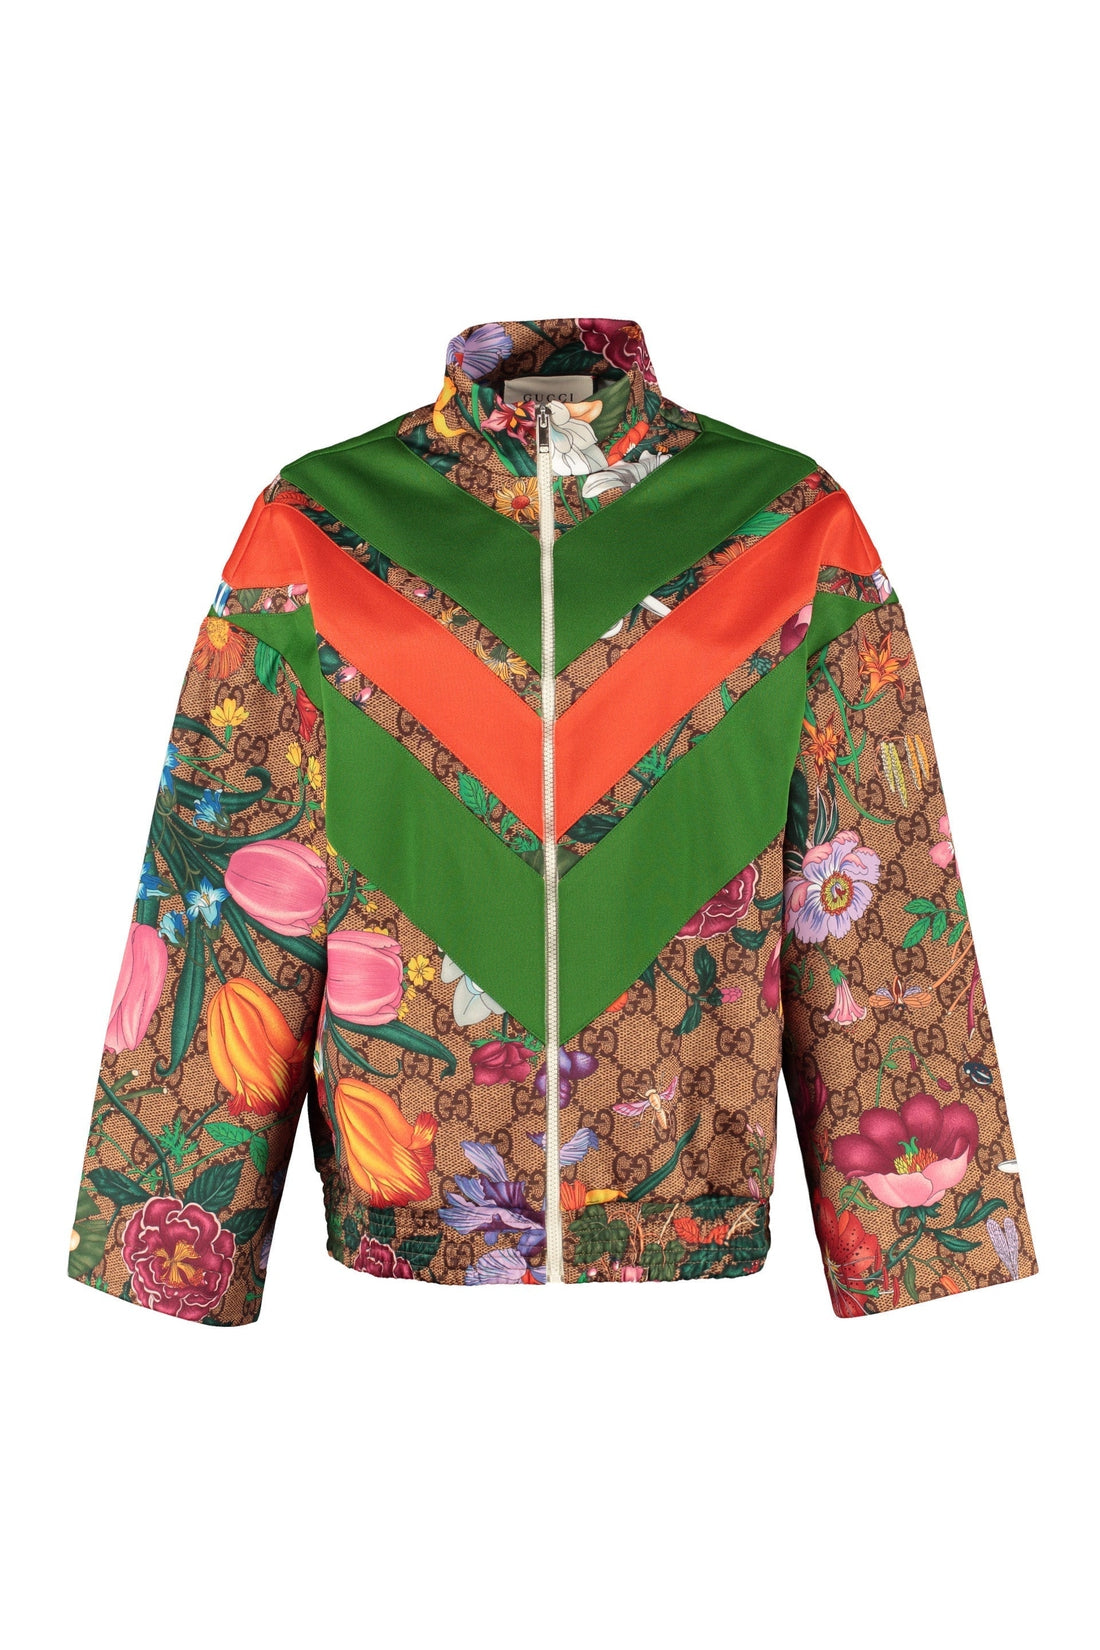 Gucci-OUTLET-SALE-Printed cotton zipped sweatshirt-ARCHIVIST